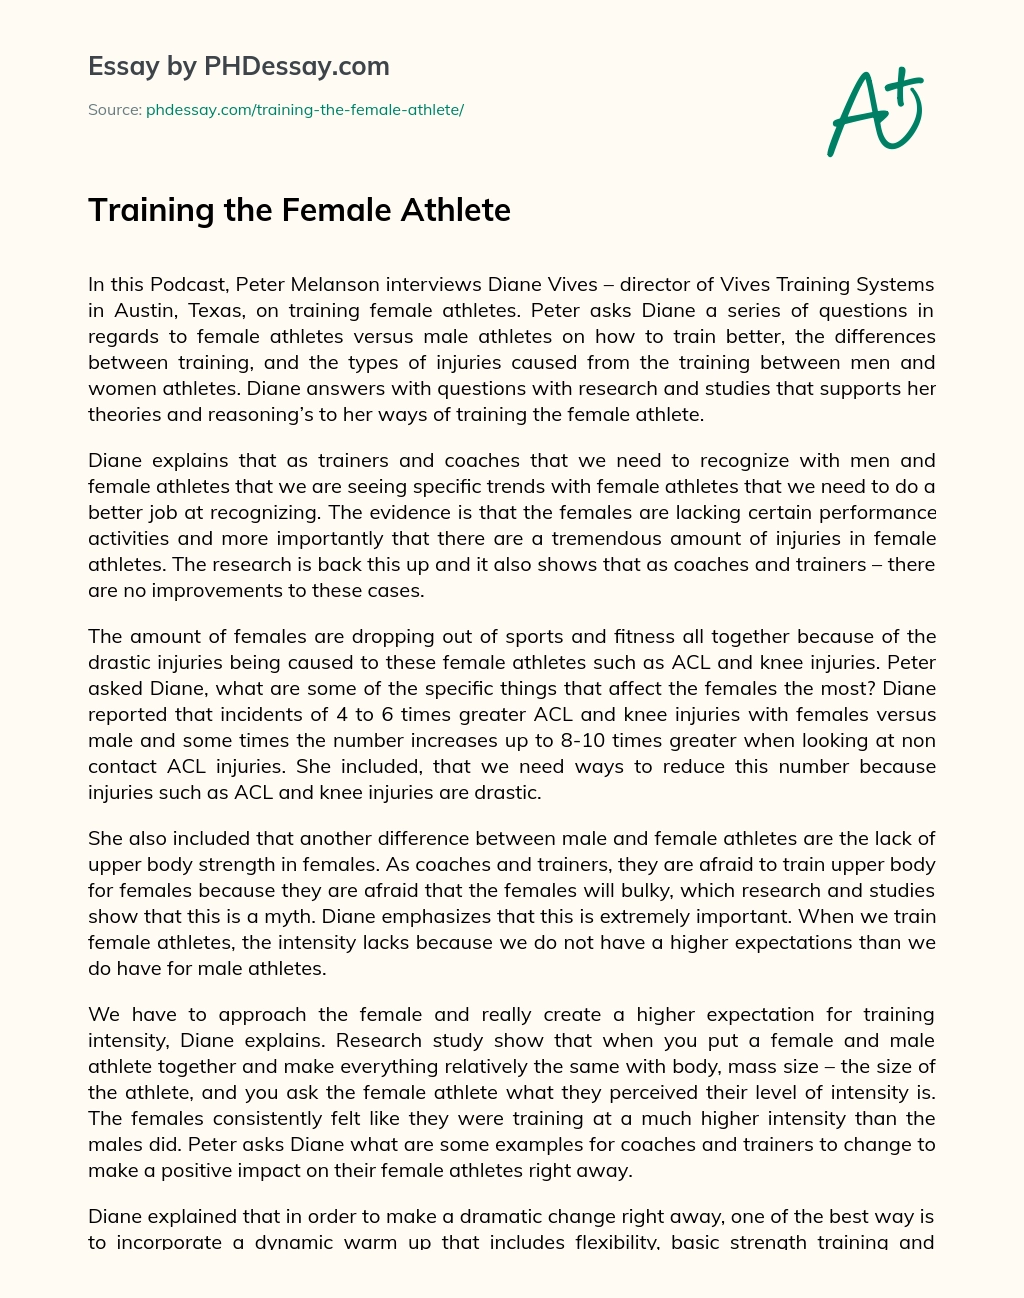 Training the Female Athlete essay